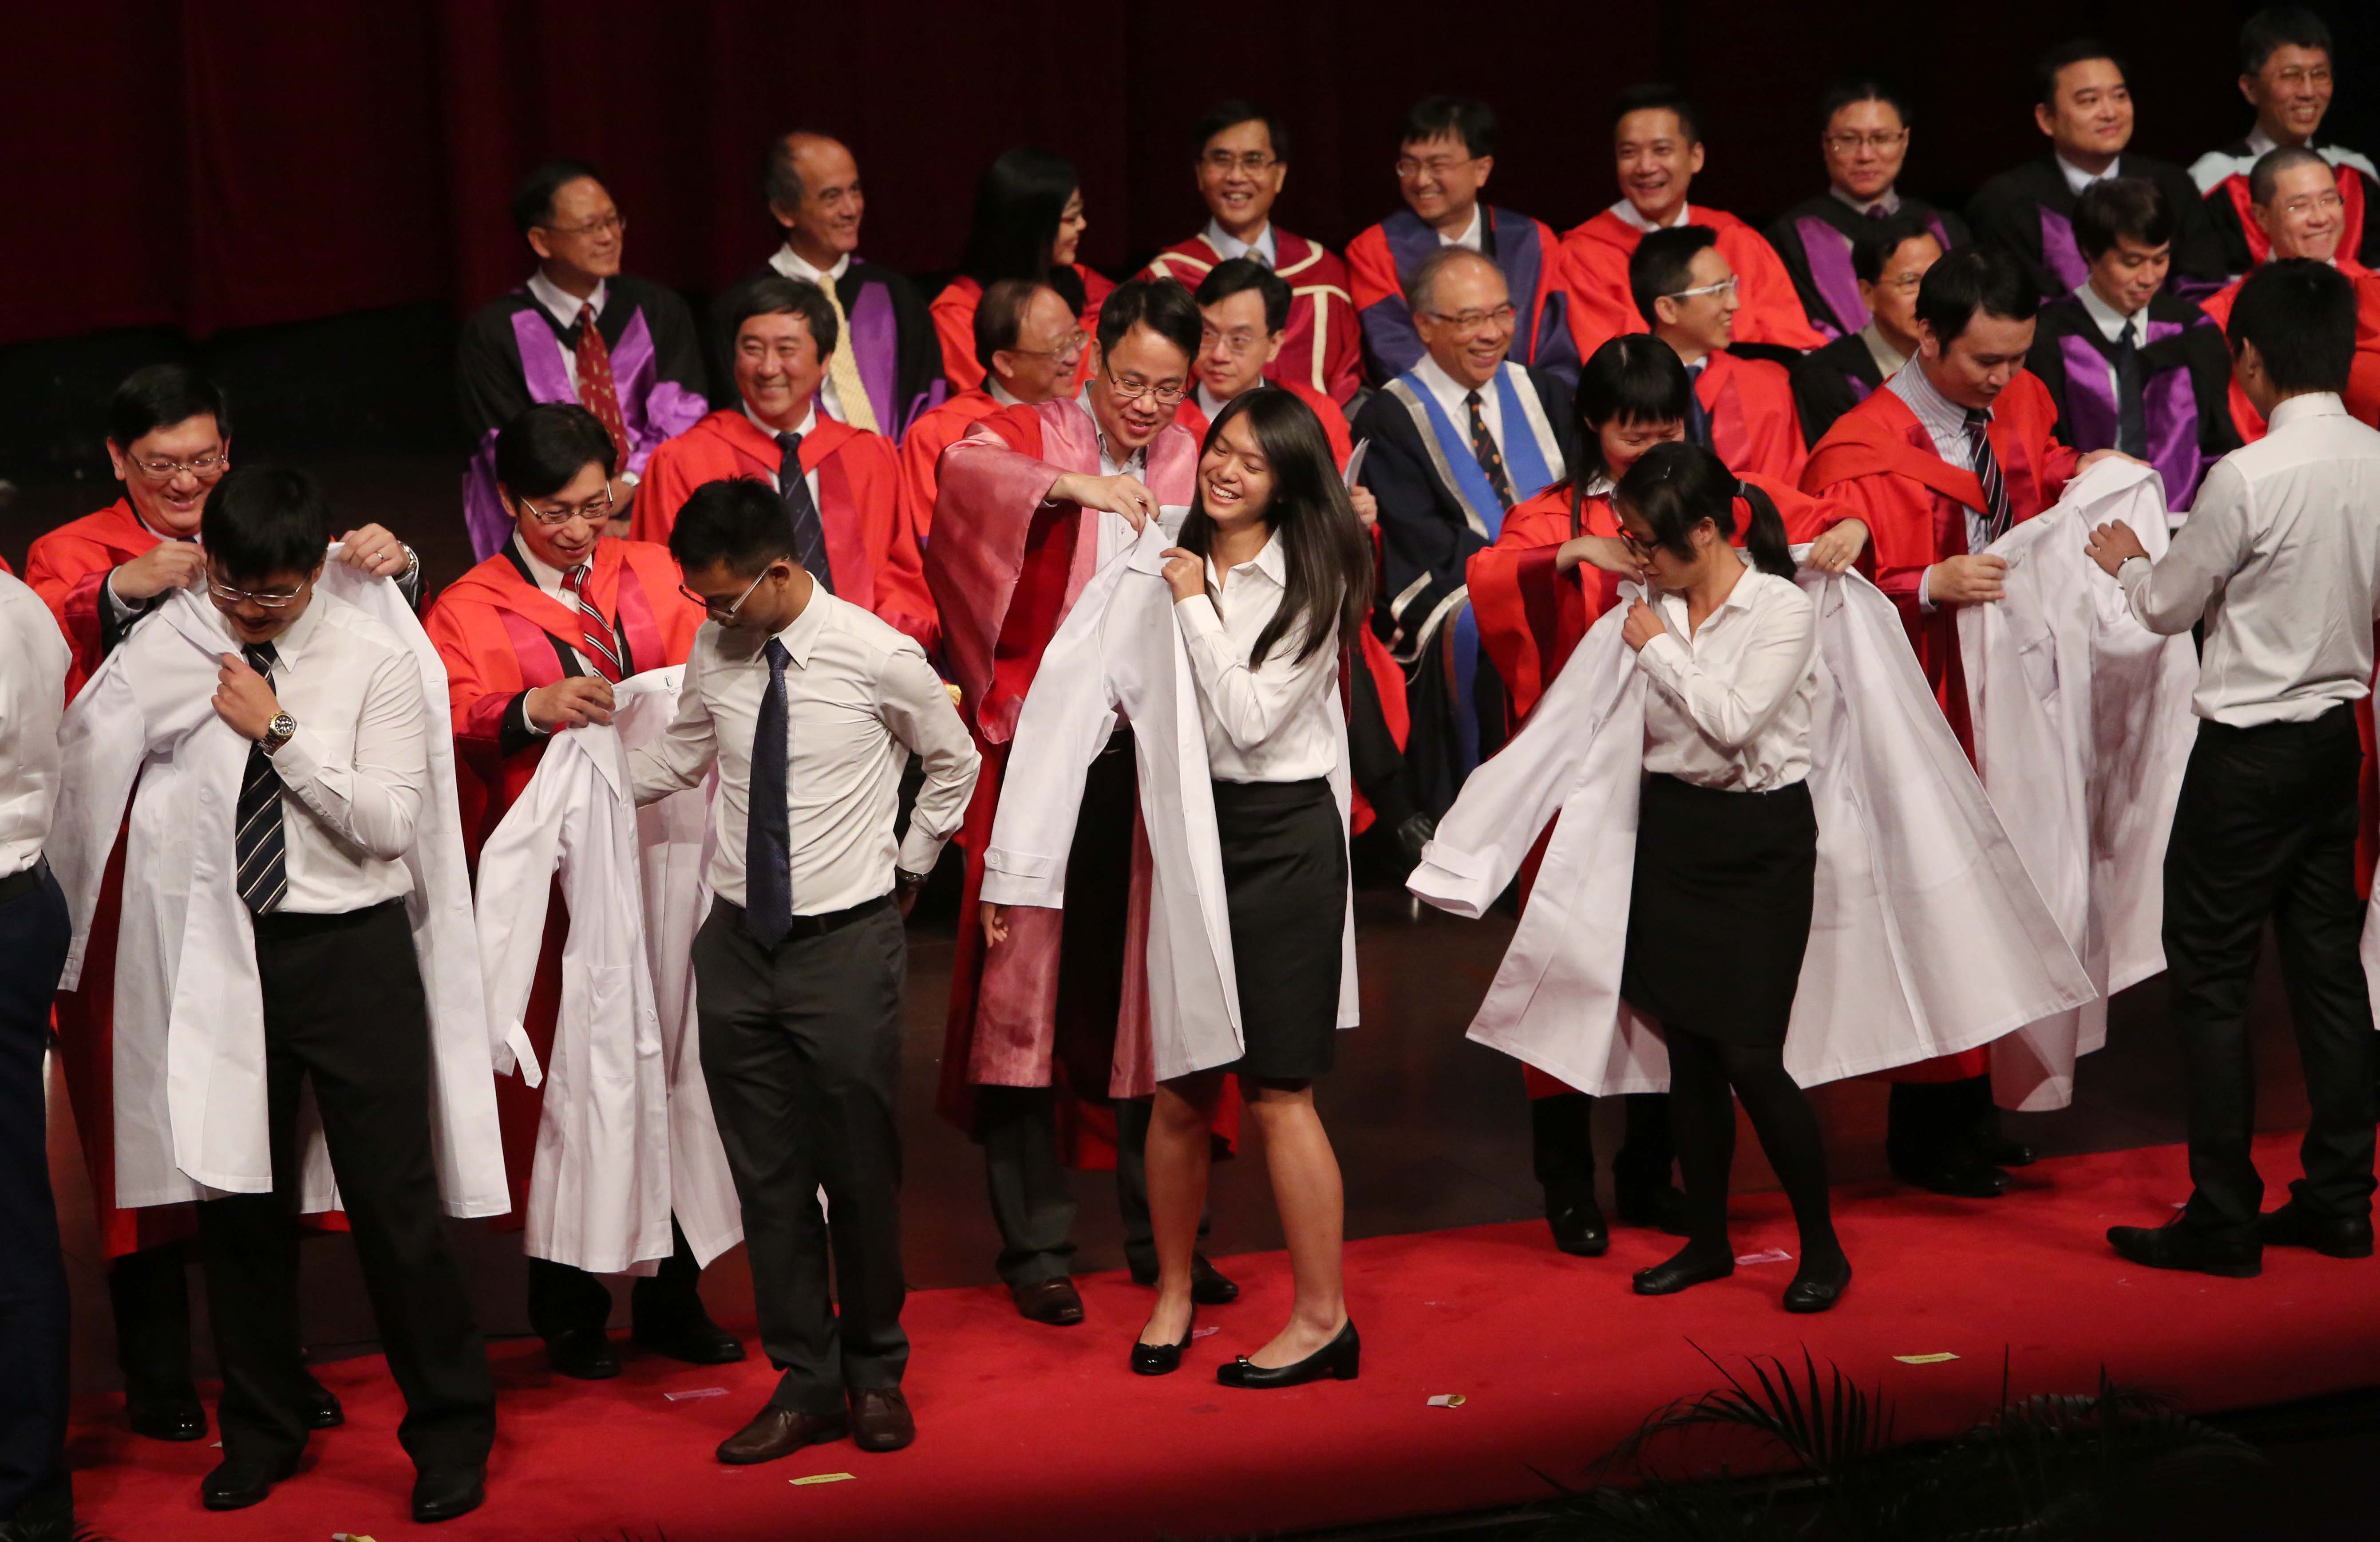 In the inaugural ‘White Coat Ceremony’, over 200 medical freshmen